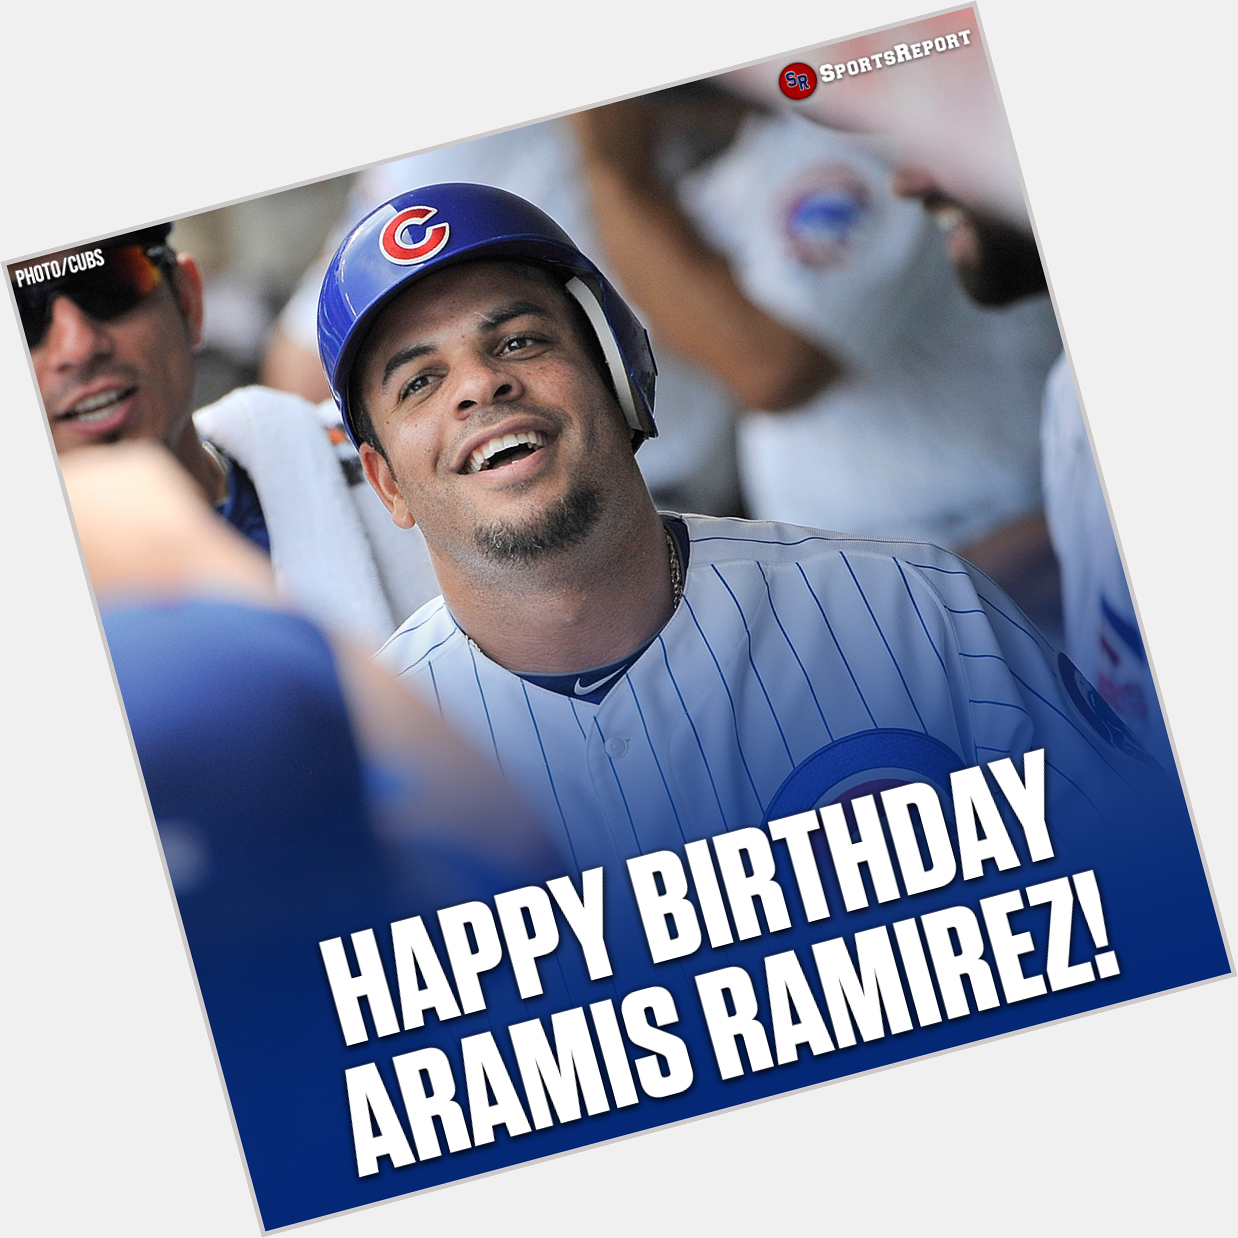  Fans, let\s wish Aramis Ramirez a Happy Birthday! 